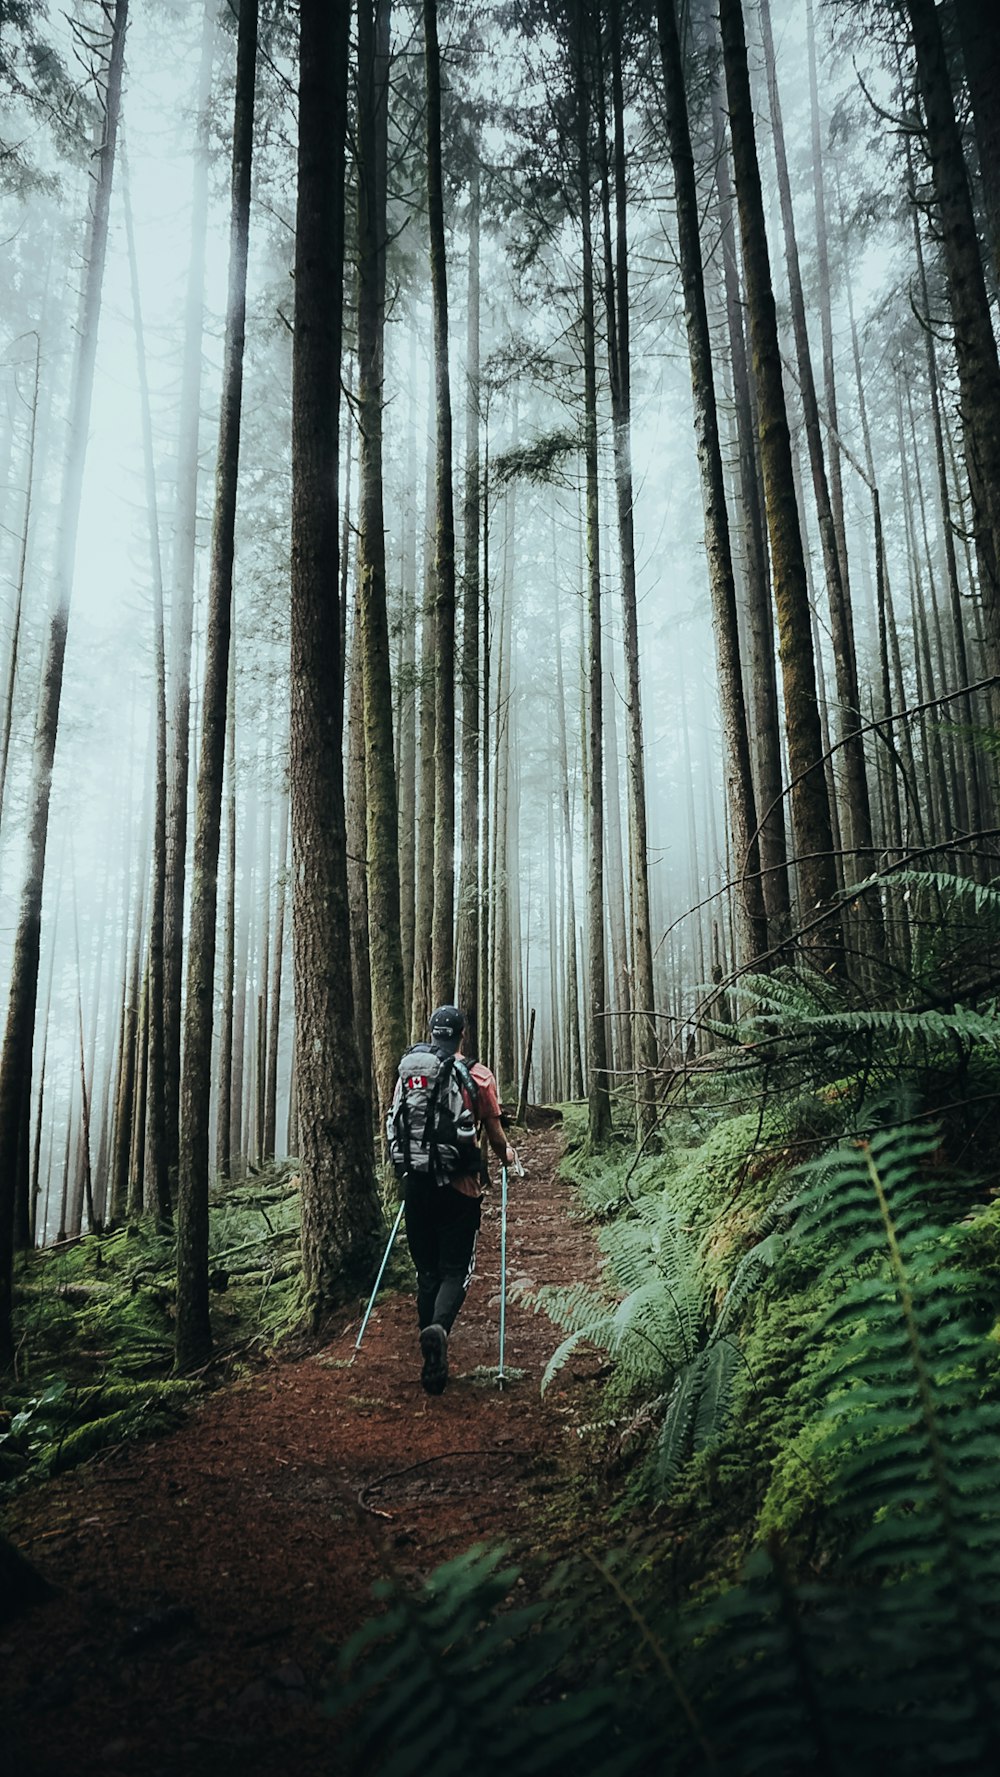 a man hiking through a forest on a trail